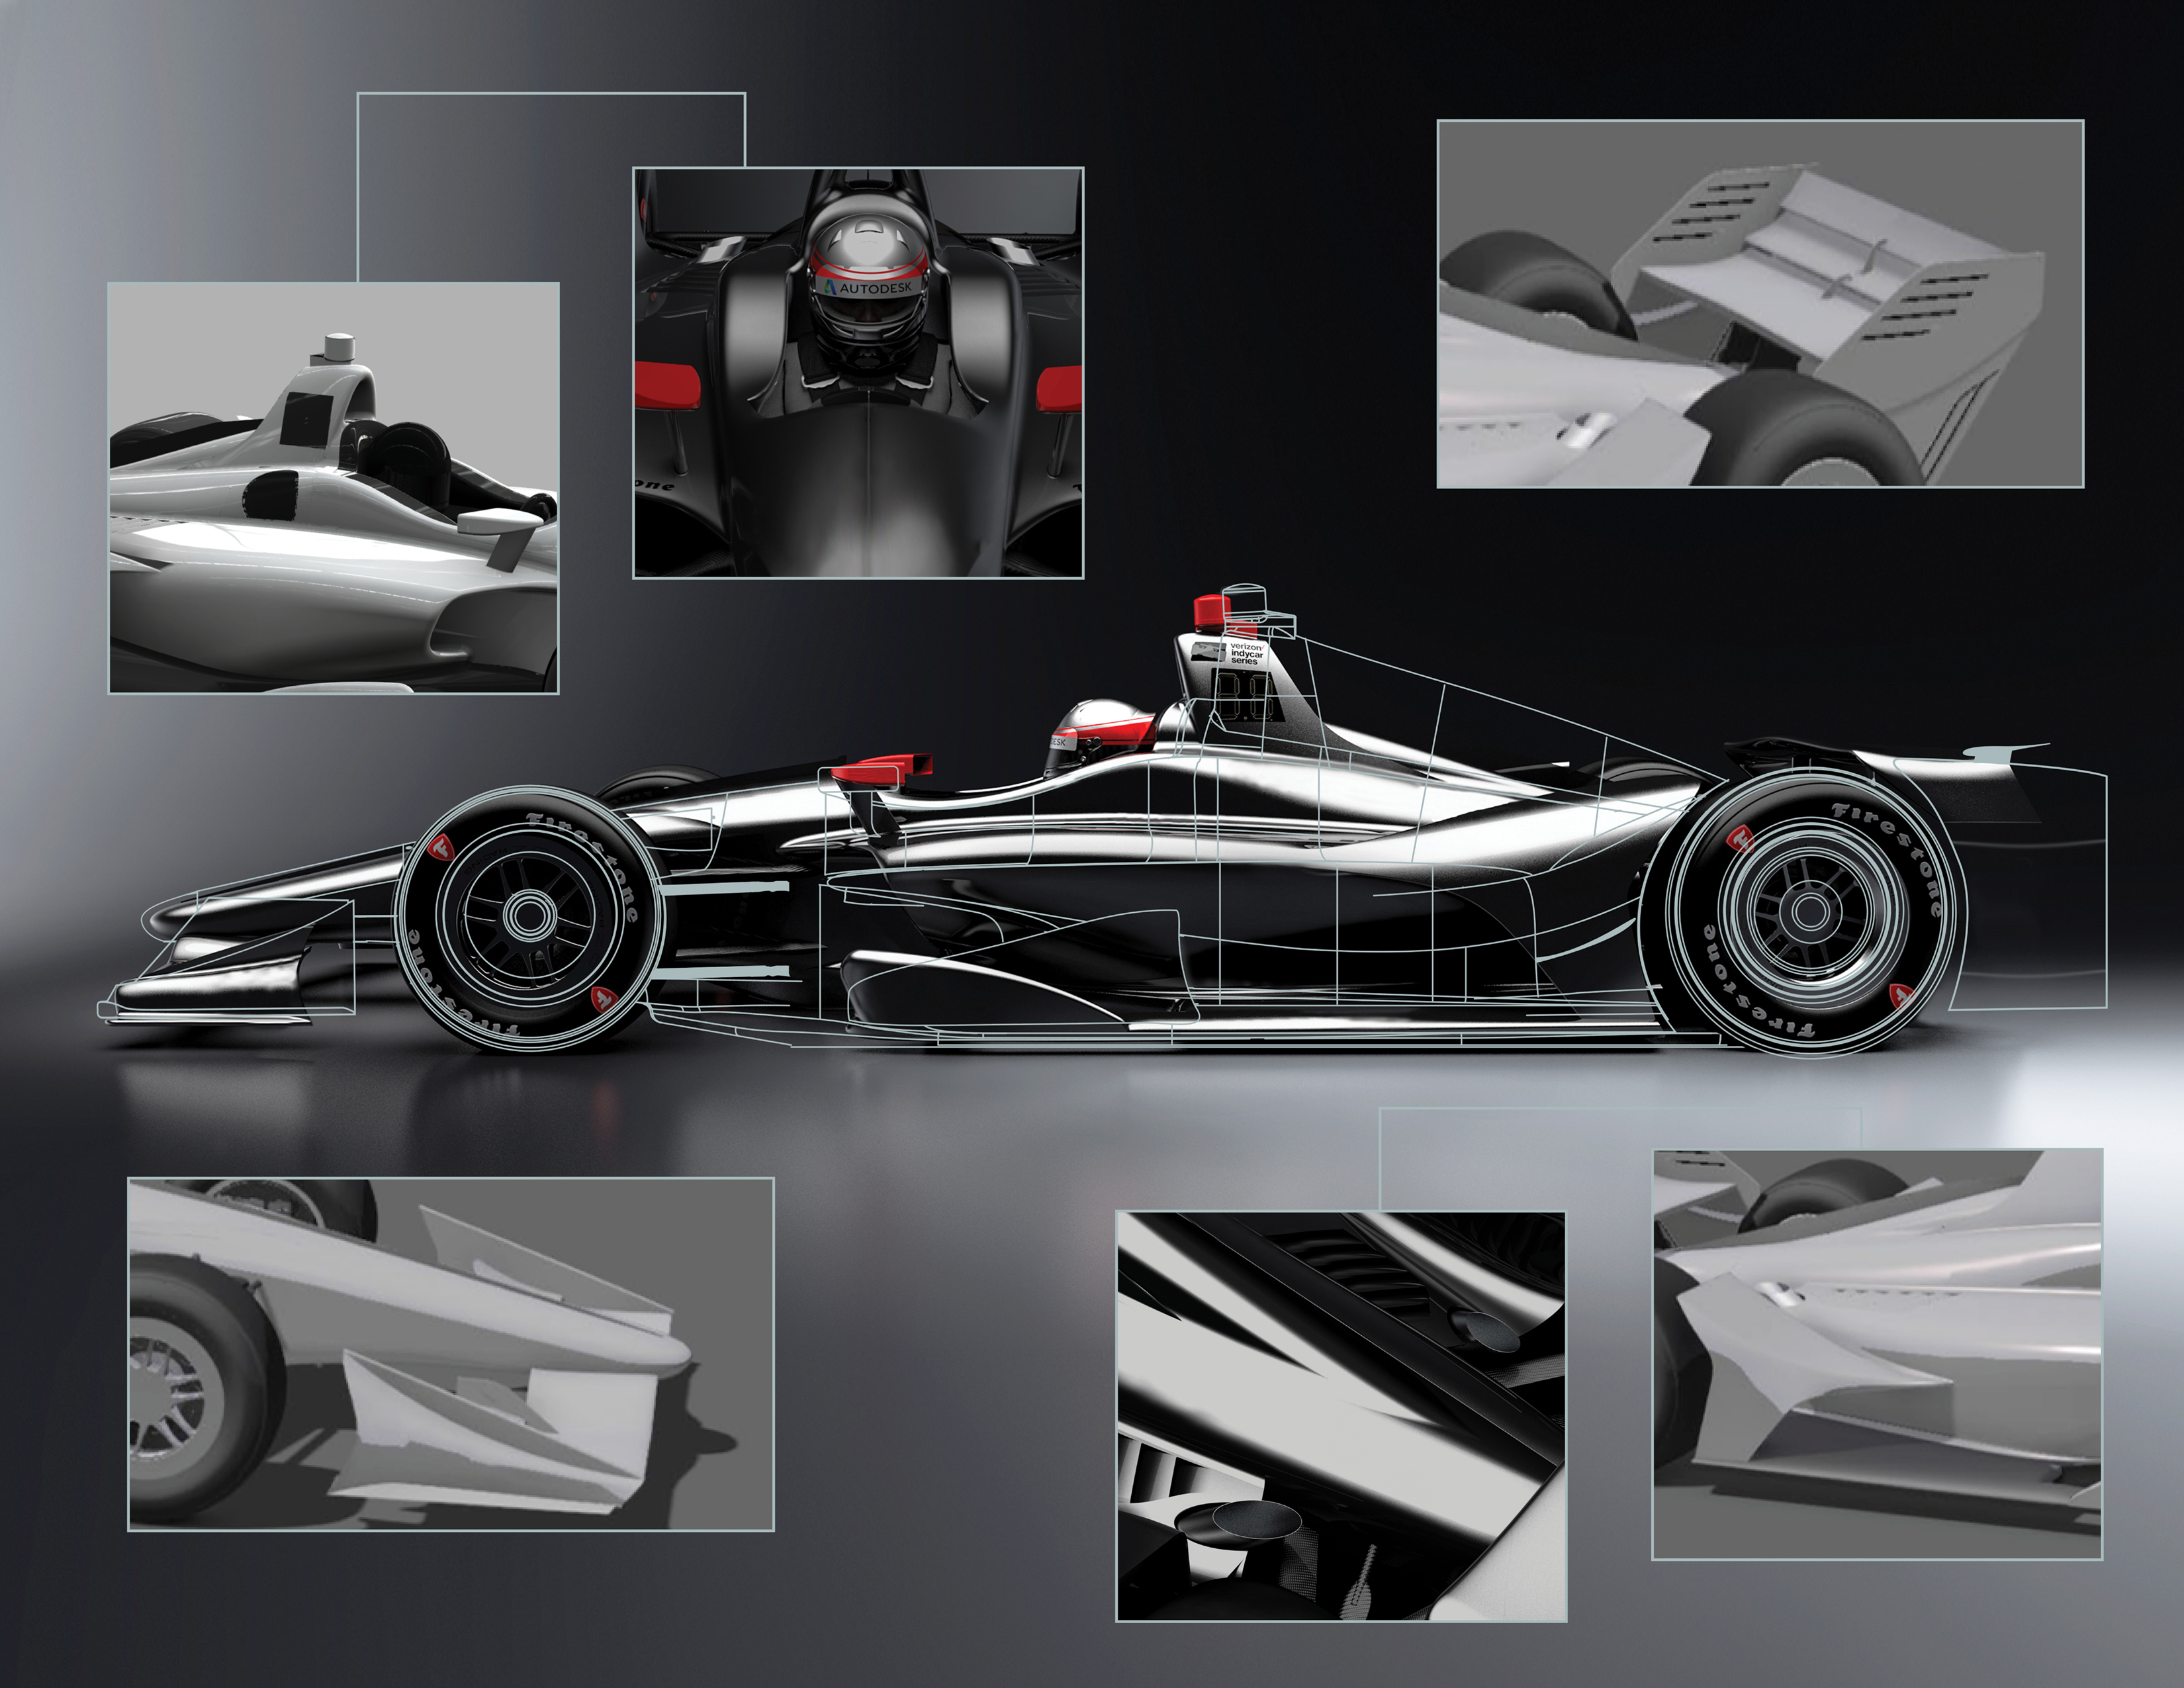 INDYCAR unveils new image of 2018 Verizon IndyCar Series car design